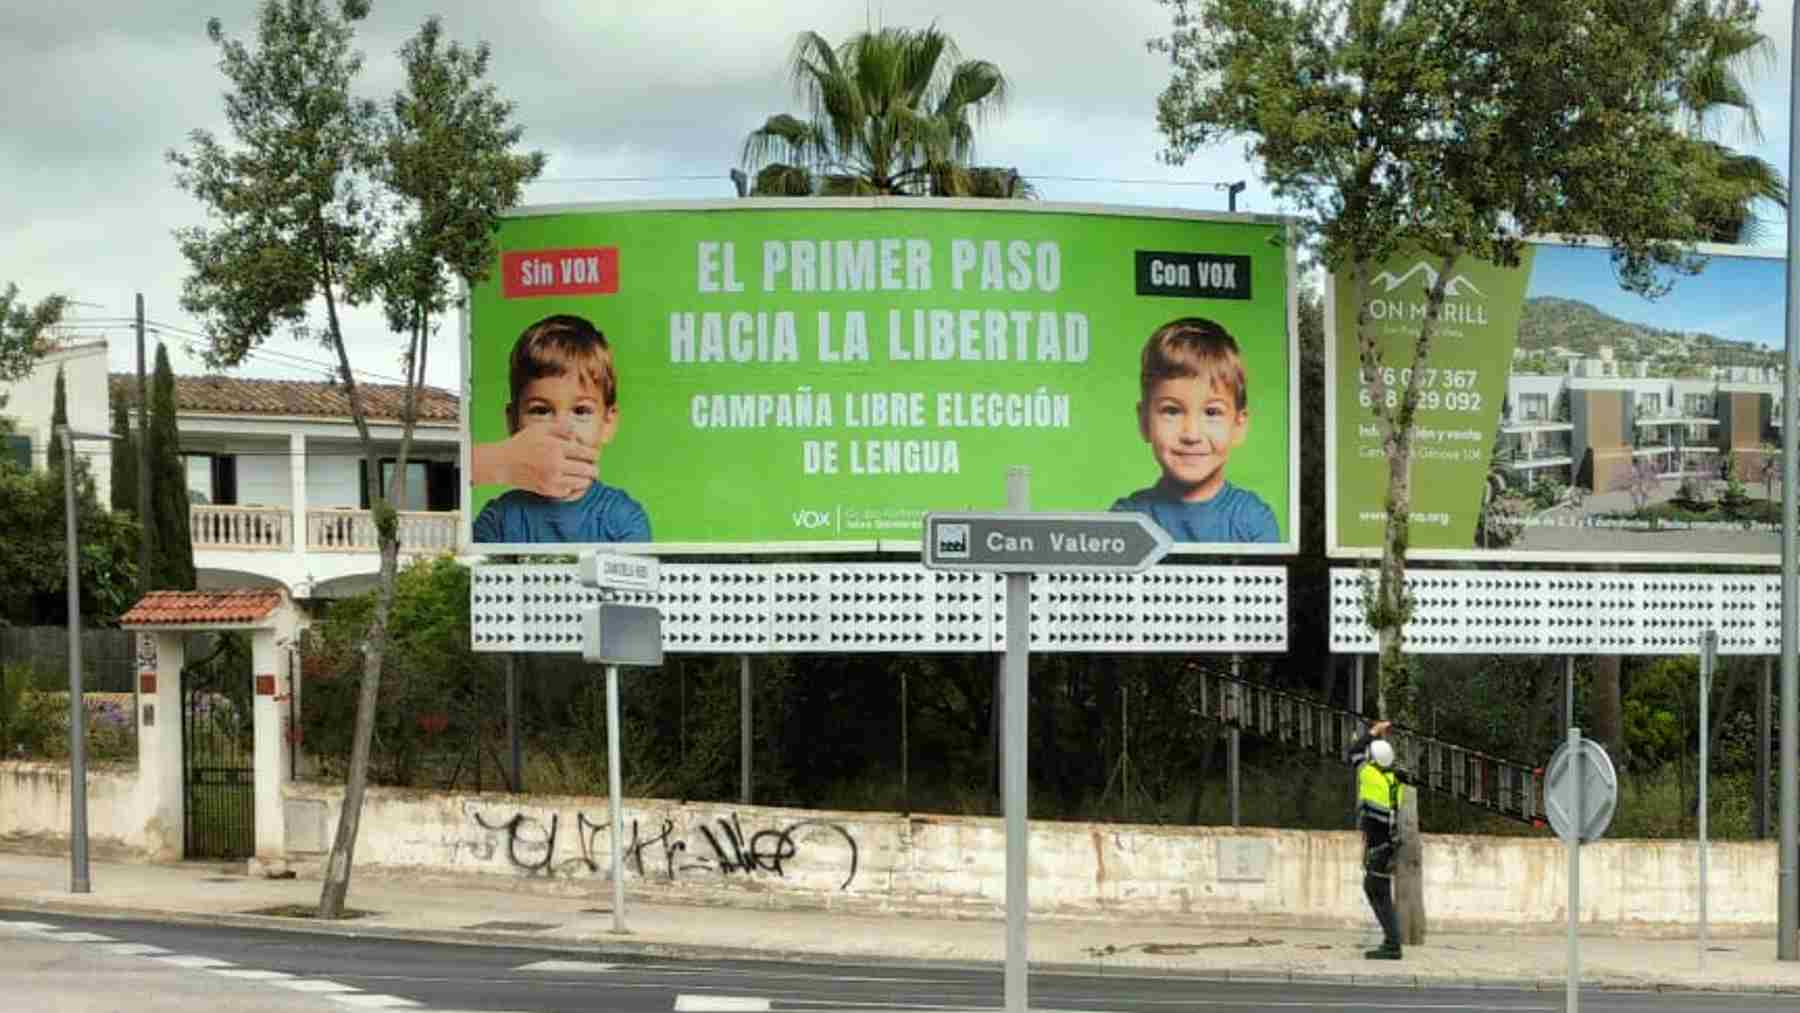 Valla publicitaria de Vox a favor de la libre elección de lengua en Palma.